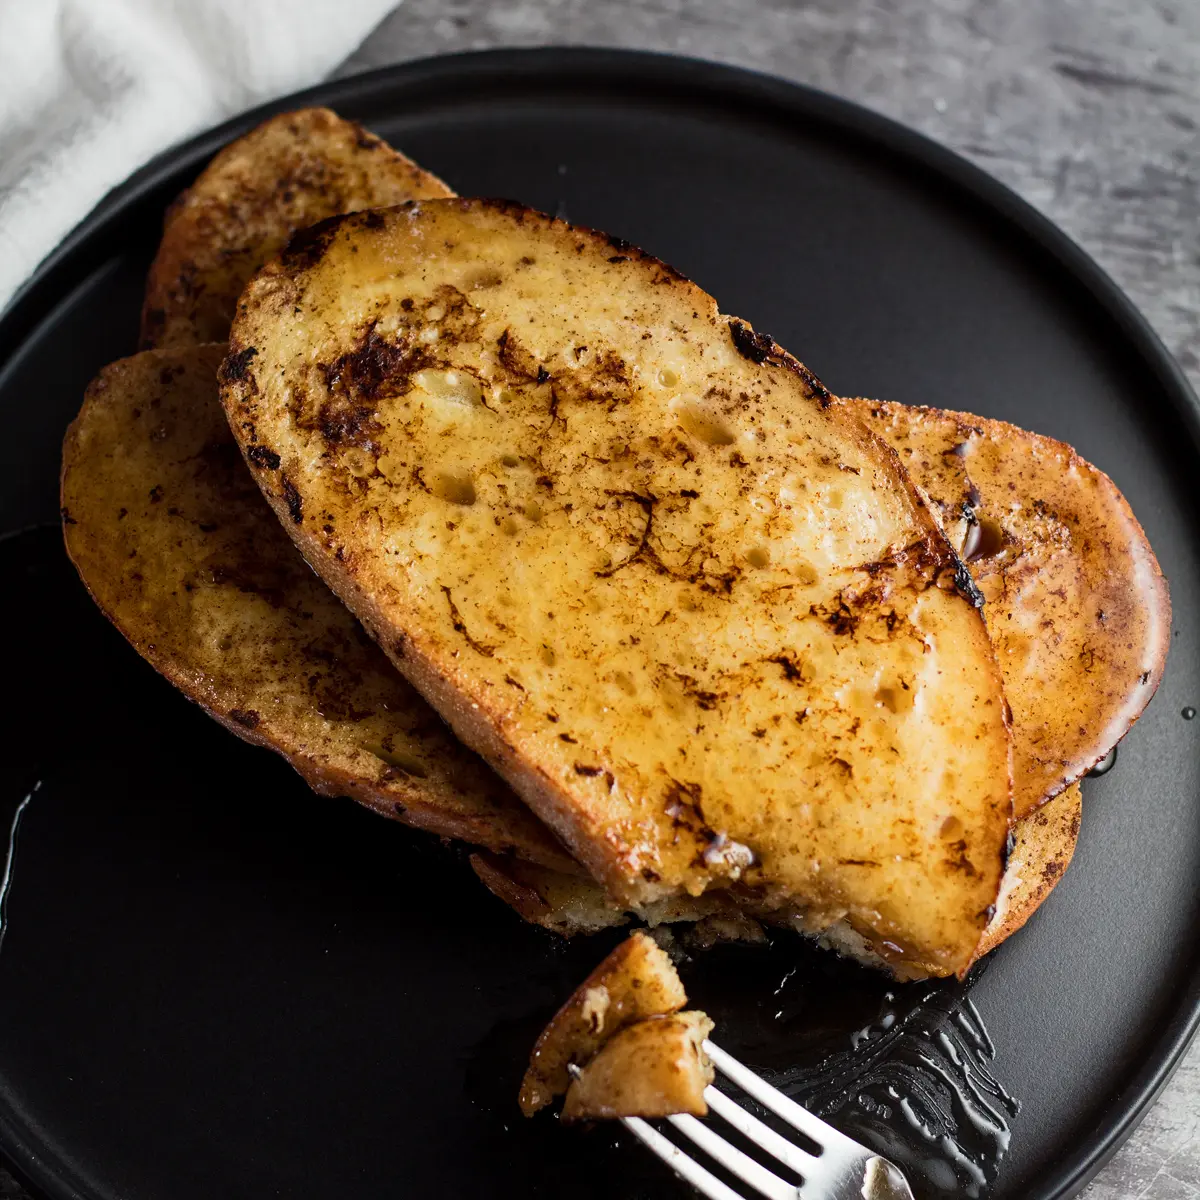 veliki kvadrat najbolji tost francuski tost na crnom tanjuru.